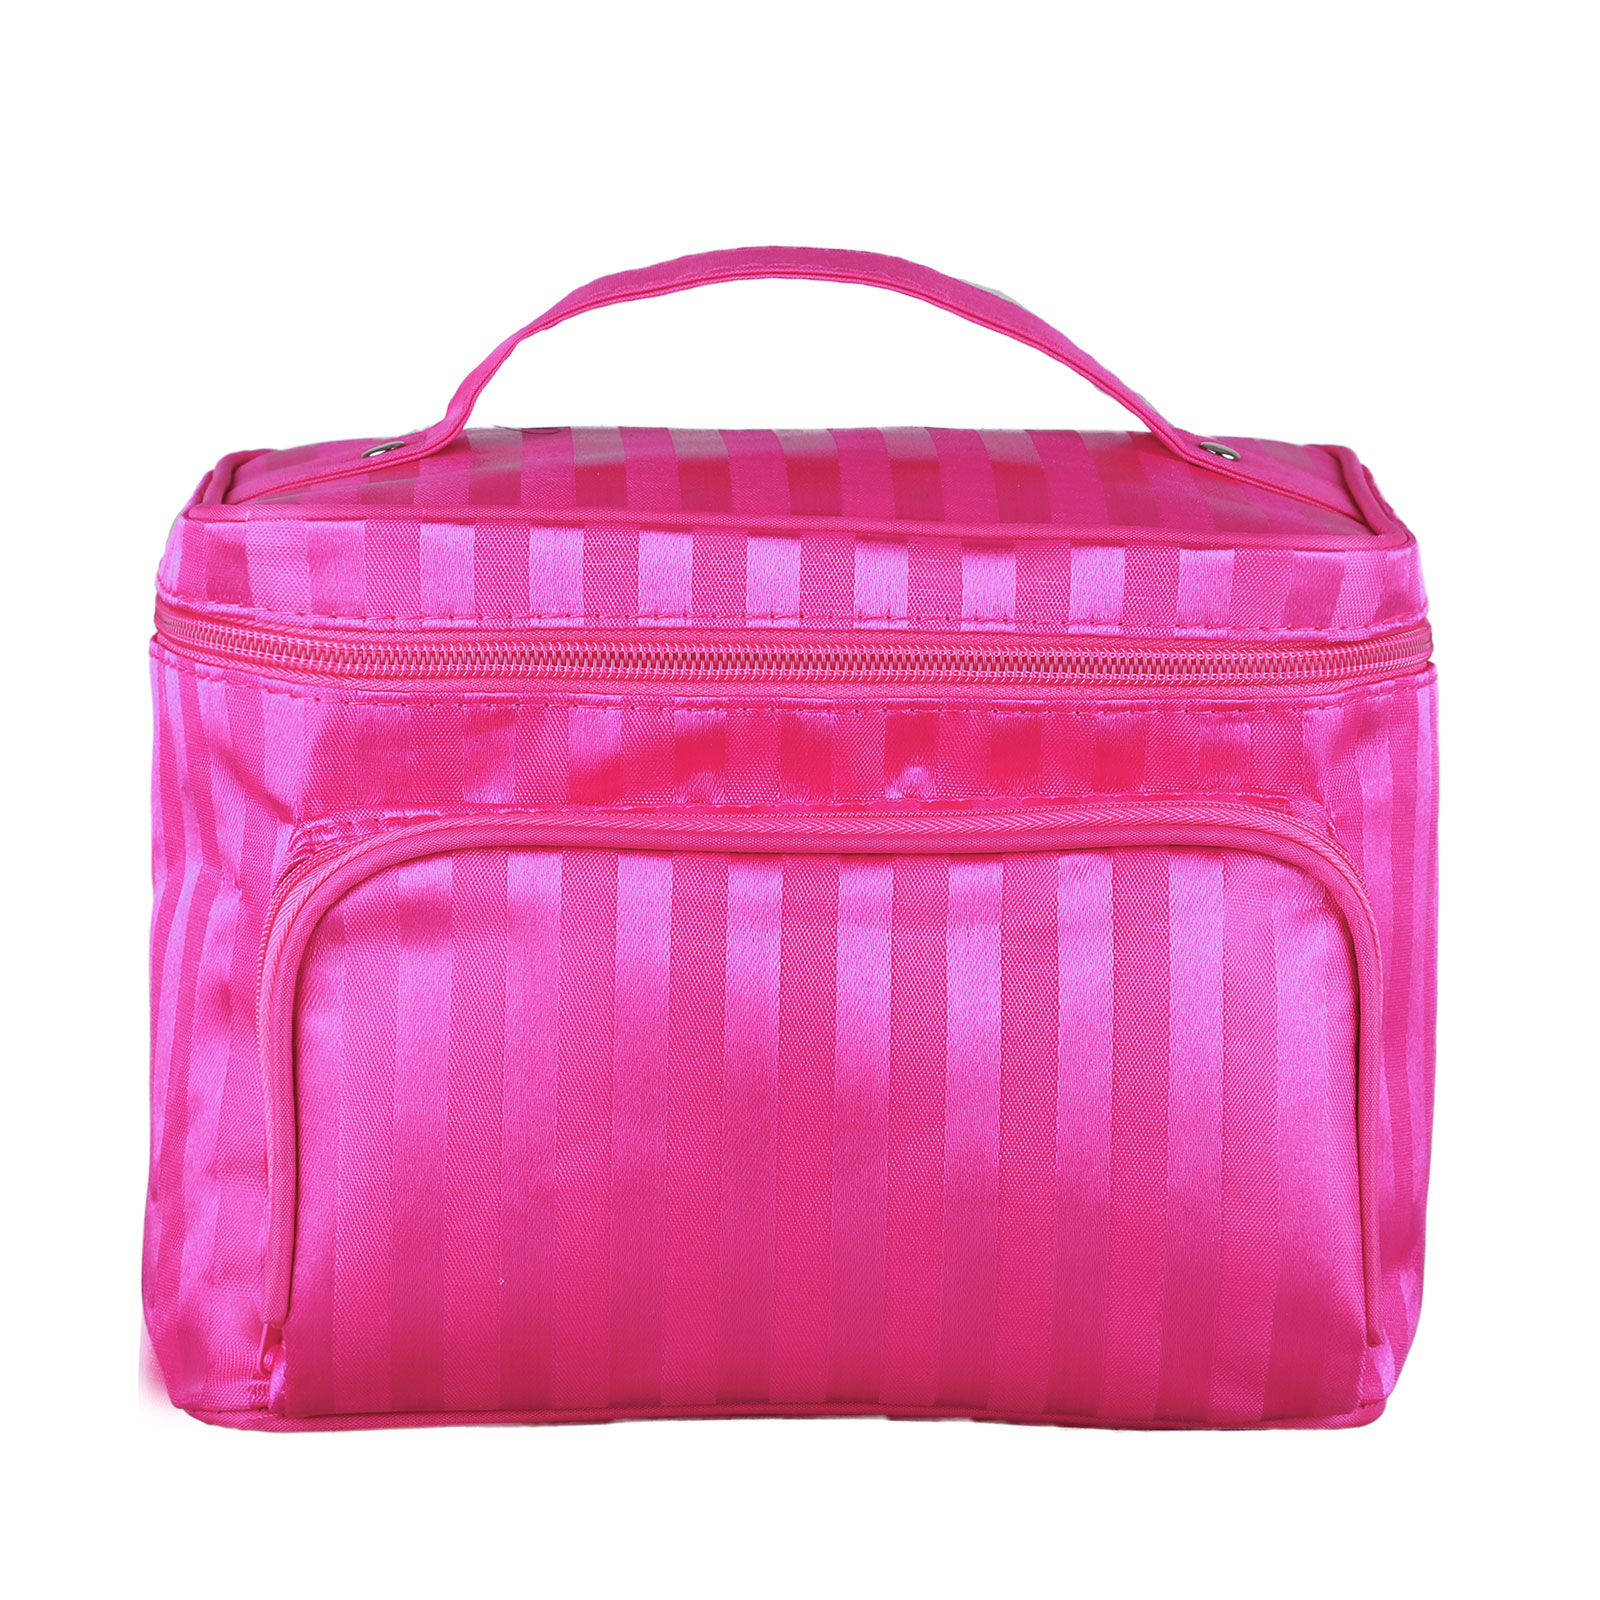 Professional Large Makeup Bag Cosmetic Case Storage Handle Organizer